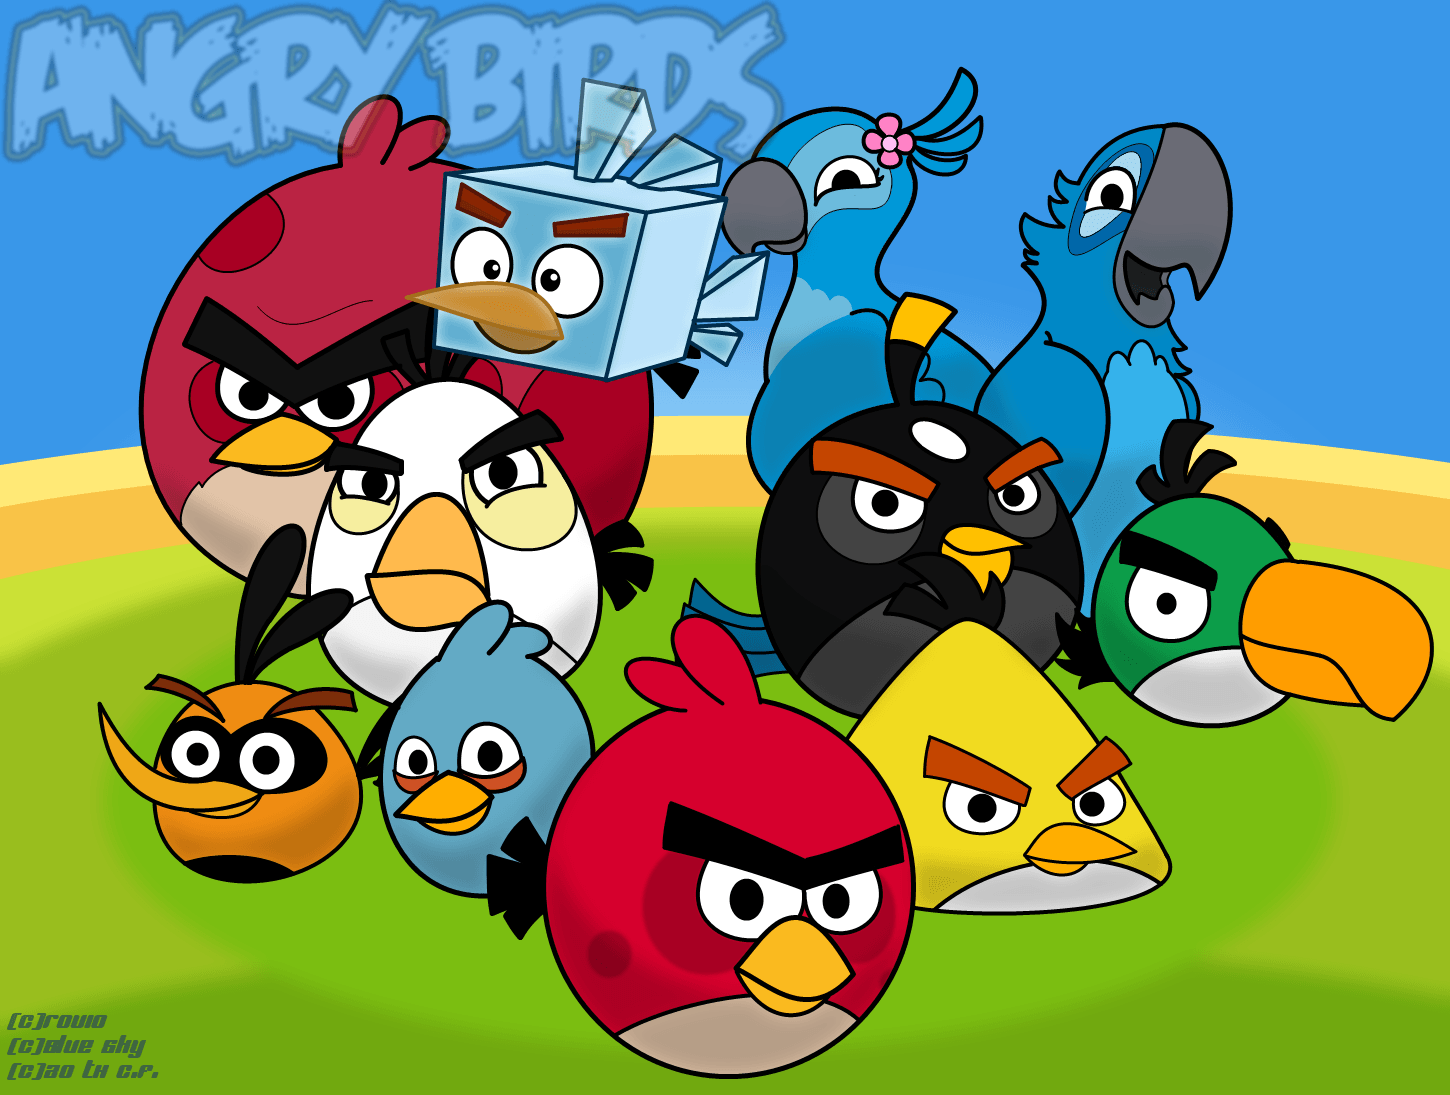 Angry Birds Wallpaper V2 By Olocoonstito D4slmoz.png